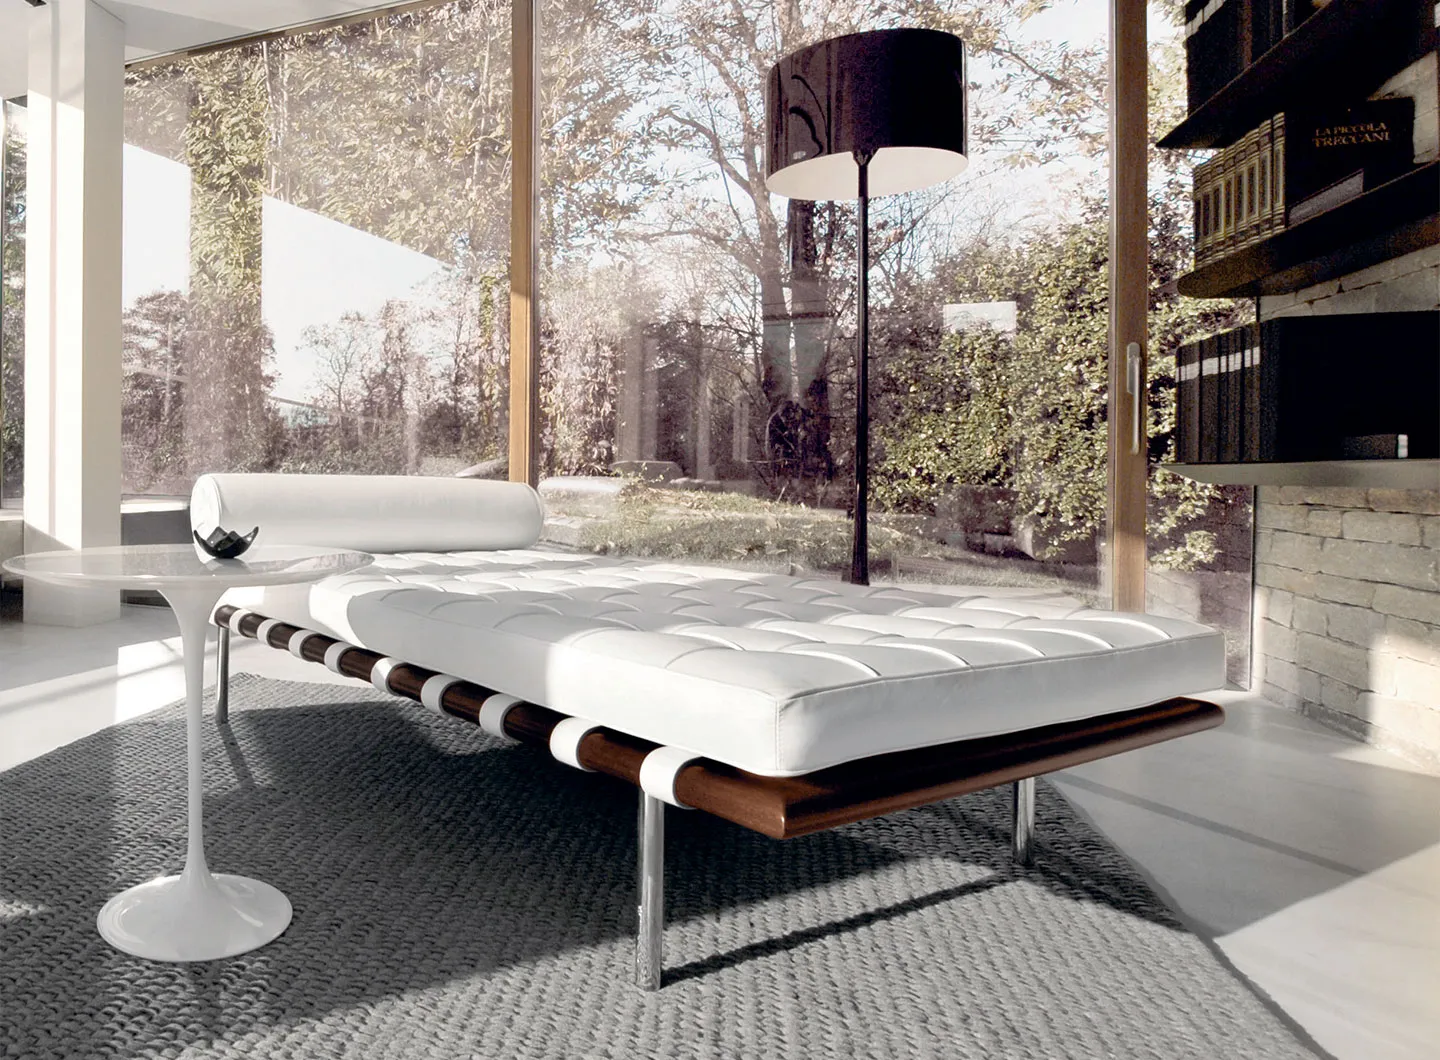 Barcelona® Couch by Ludwig Mies van der Rohe, Ph. Ezio Prandini